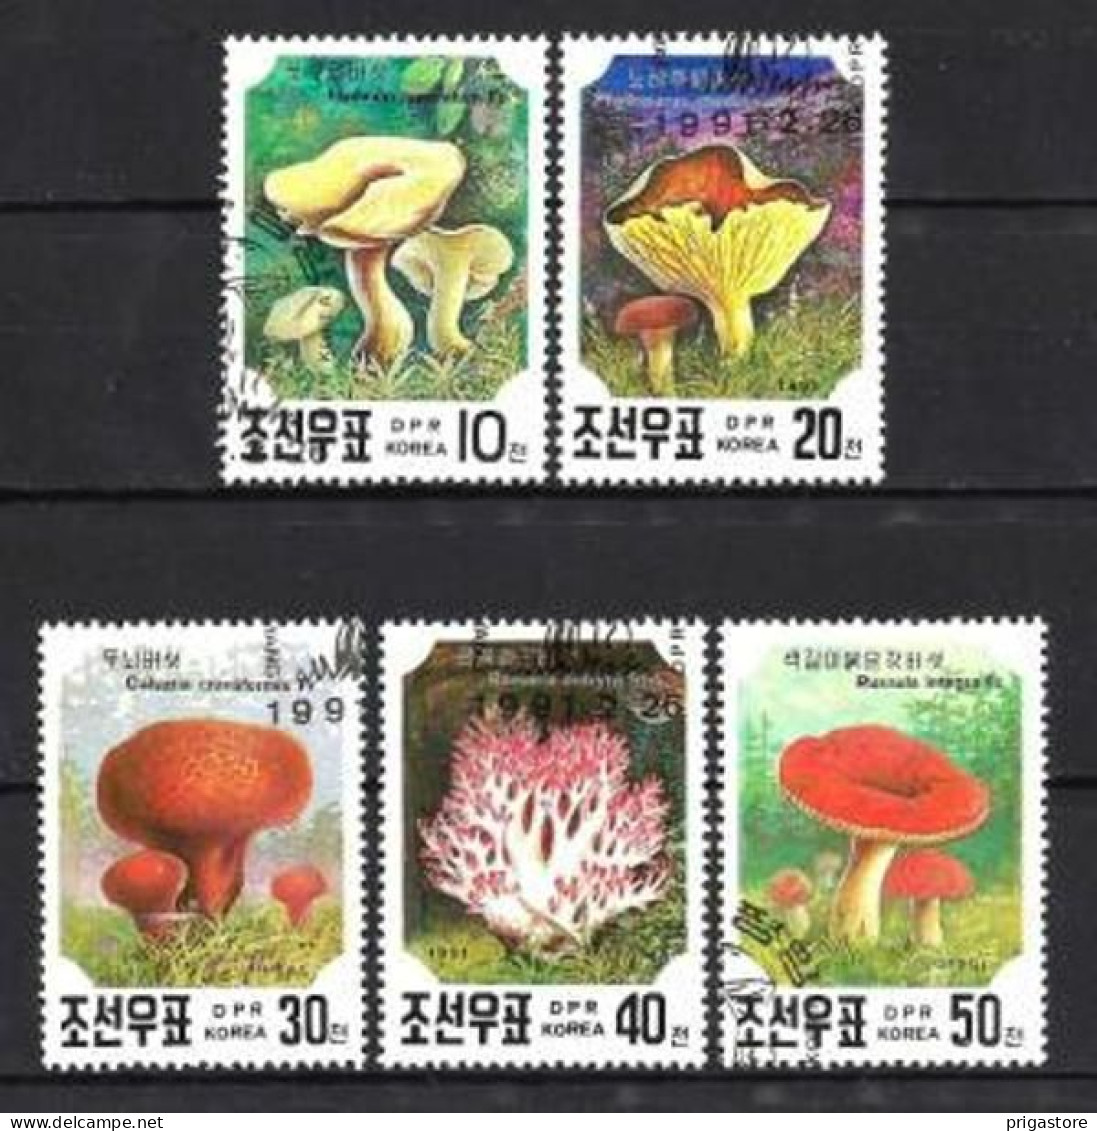 Champignons Corée Du Nord 1991 (33) Yvert N° 2217 à 2221 Oblitérés Used - Hongos